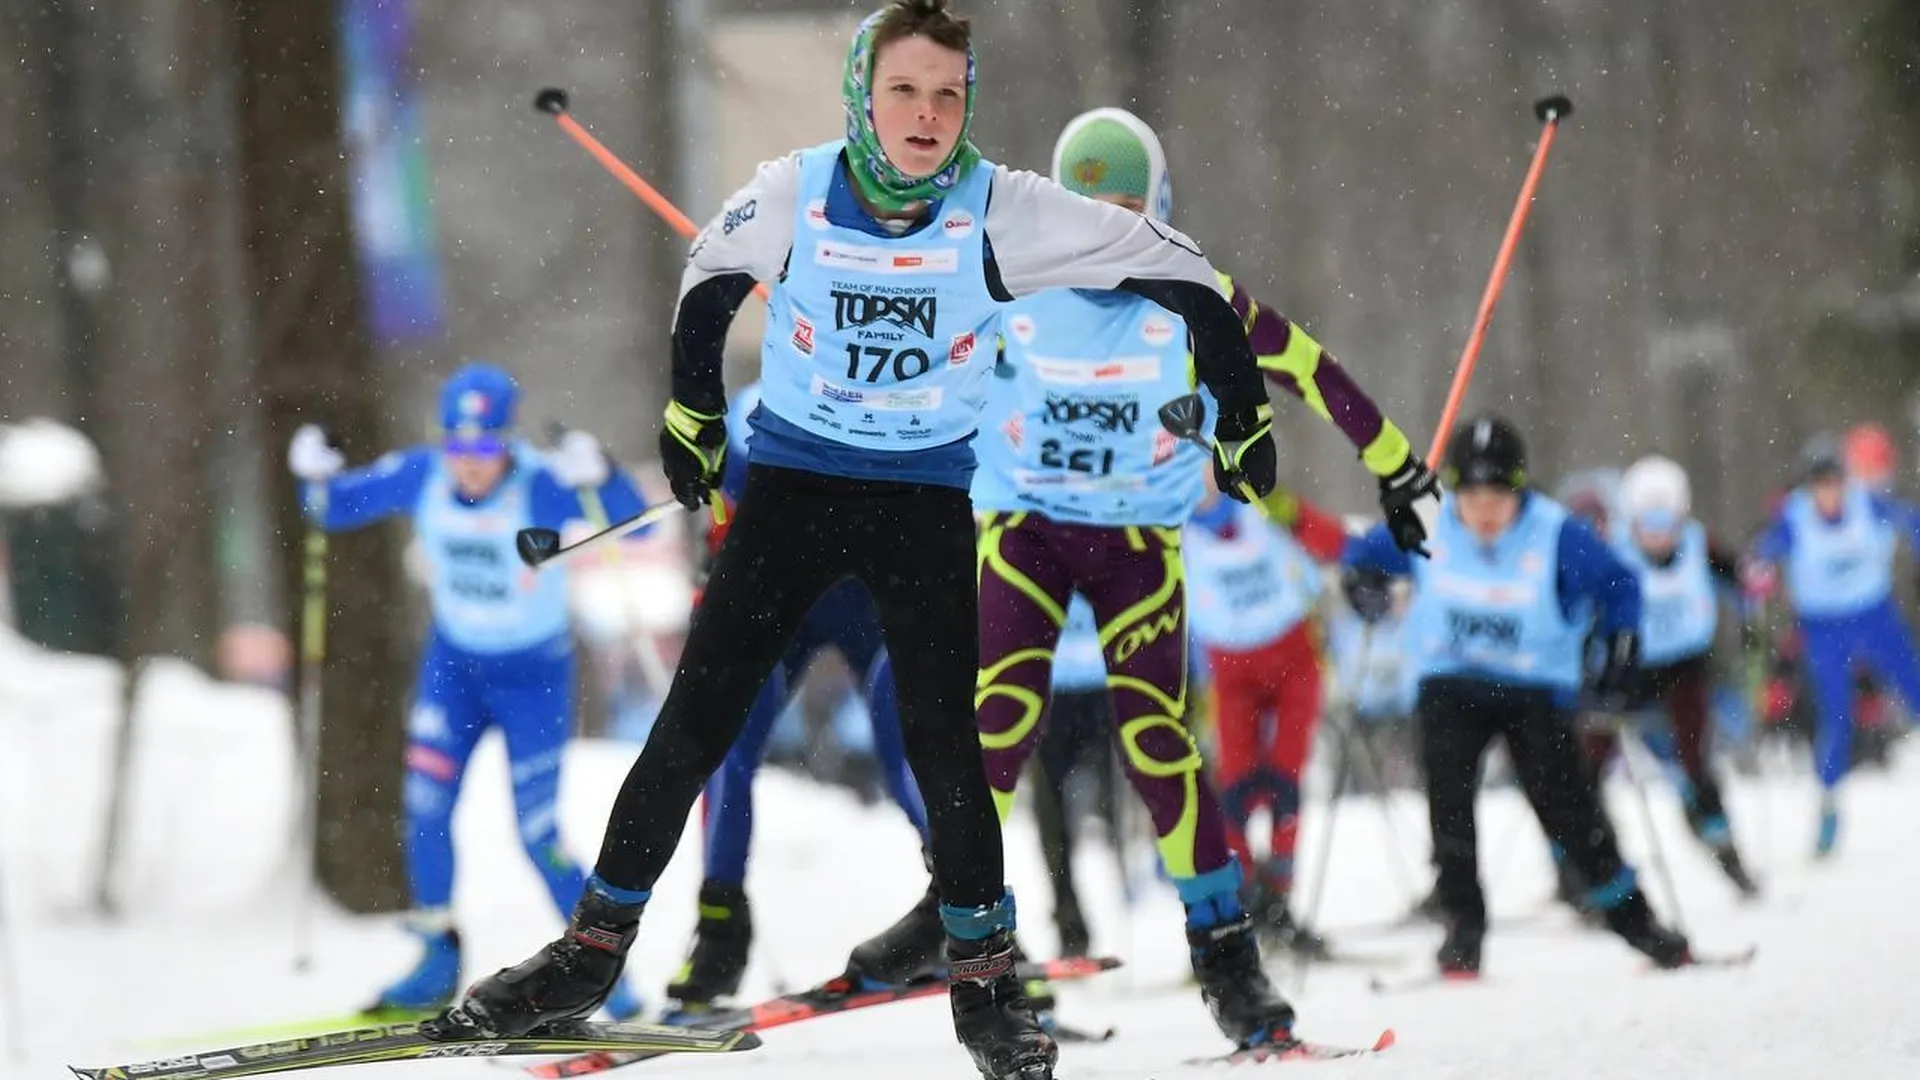 600 любителей лыж собрались на старте II этапа соревнований TOPSKI FAMILY в Одинцове